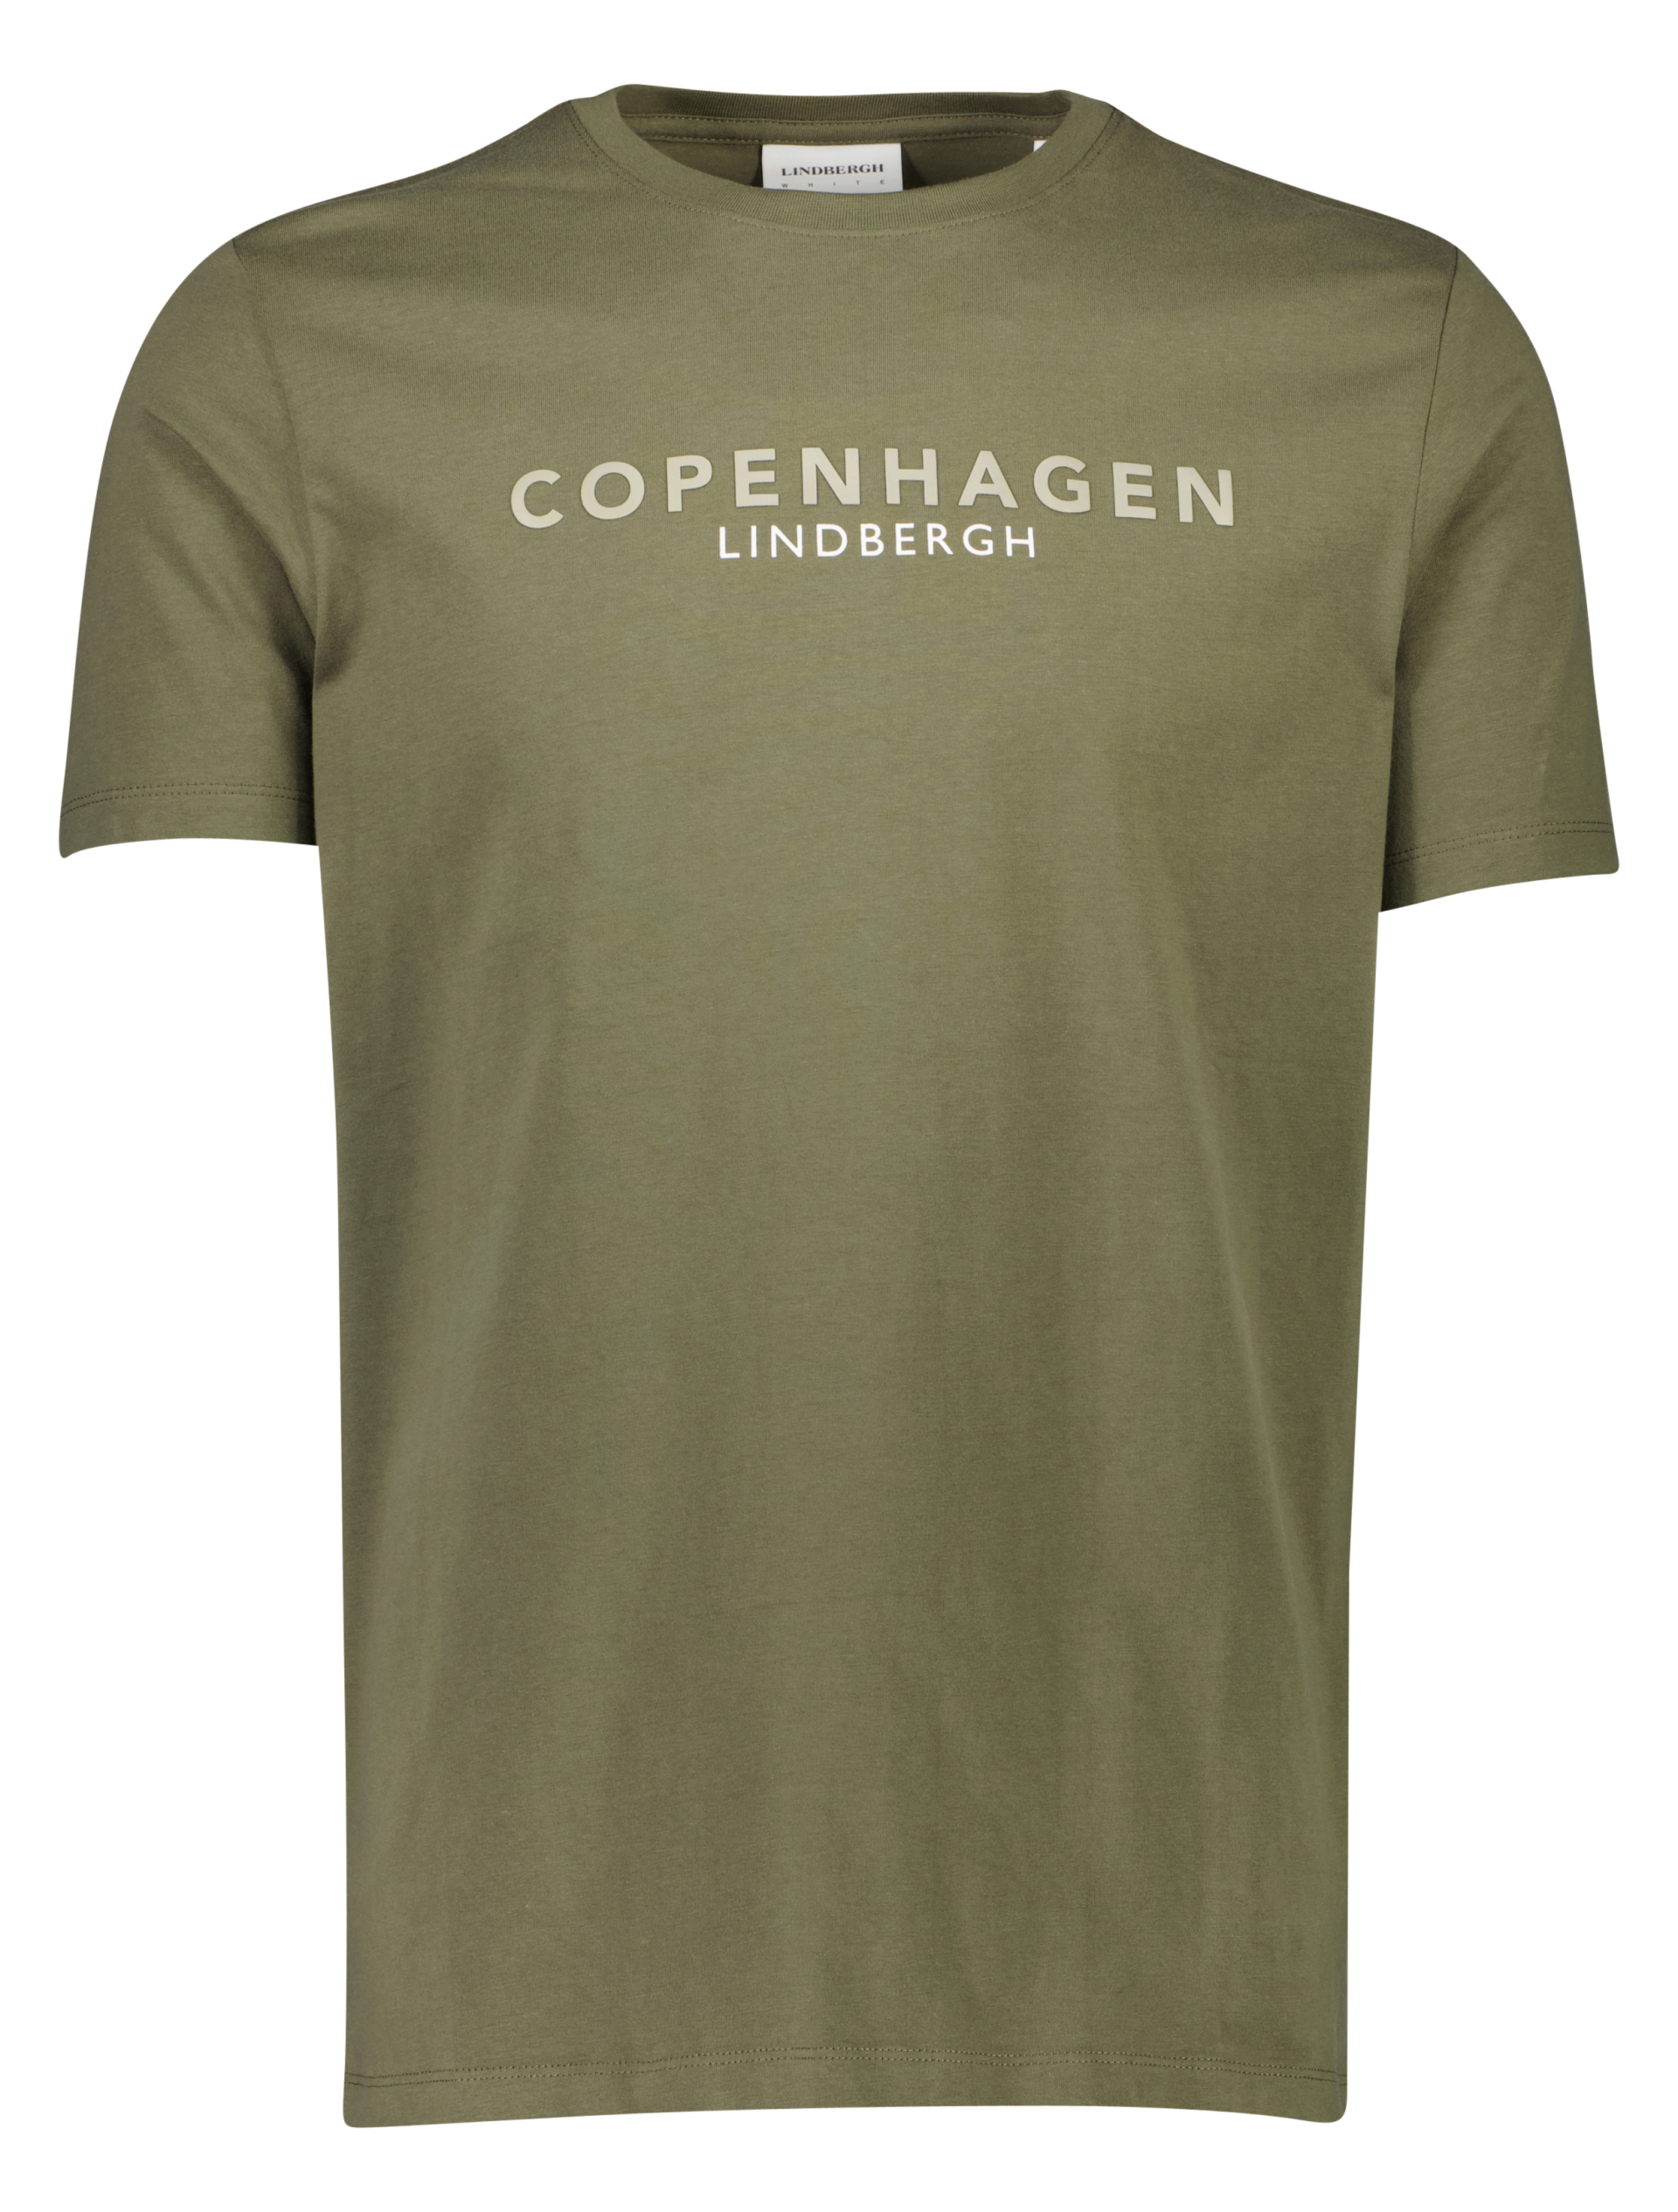 Lindbergh T-shirt grön / army 123